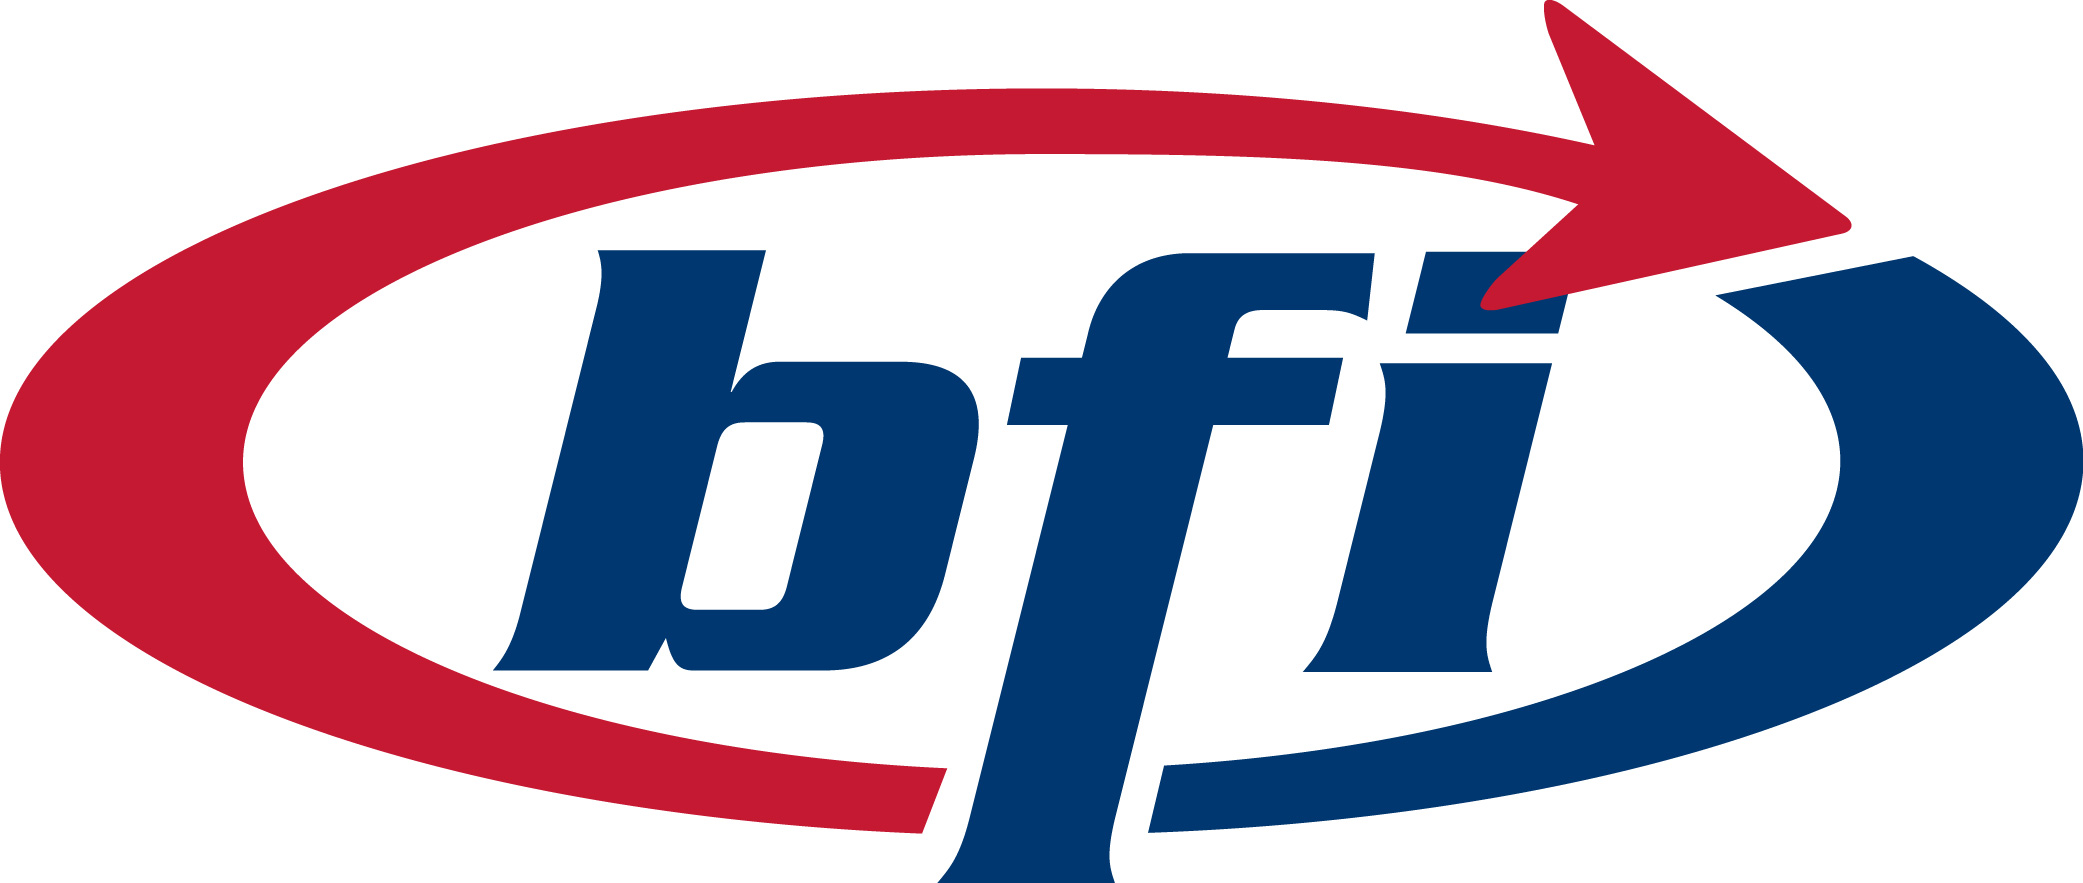 bfi-logo.jpg